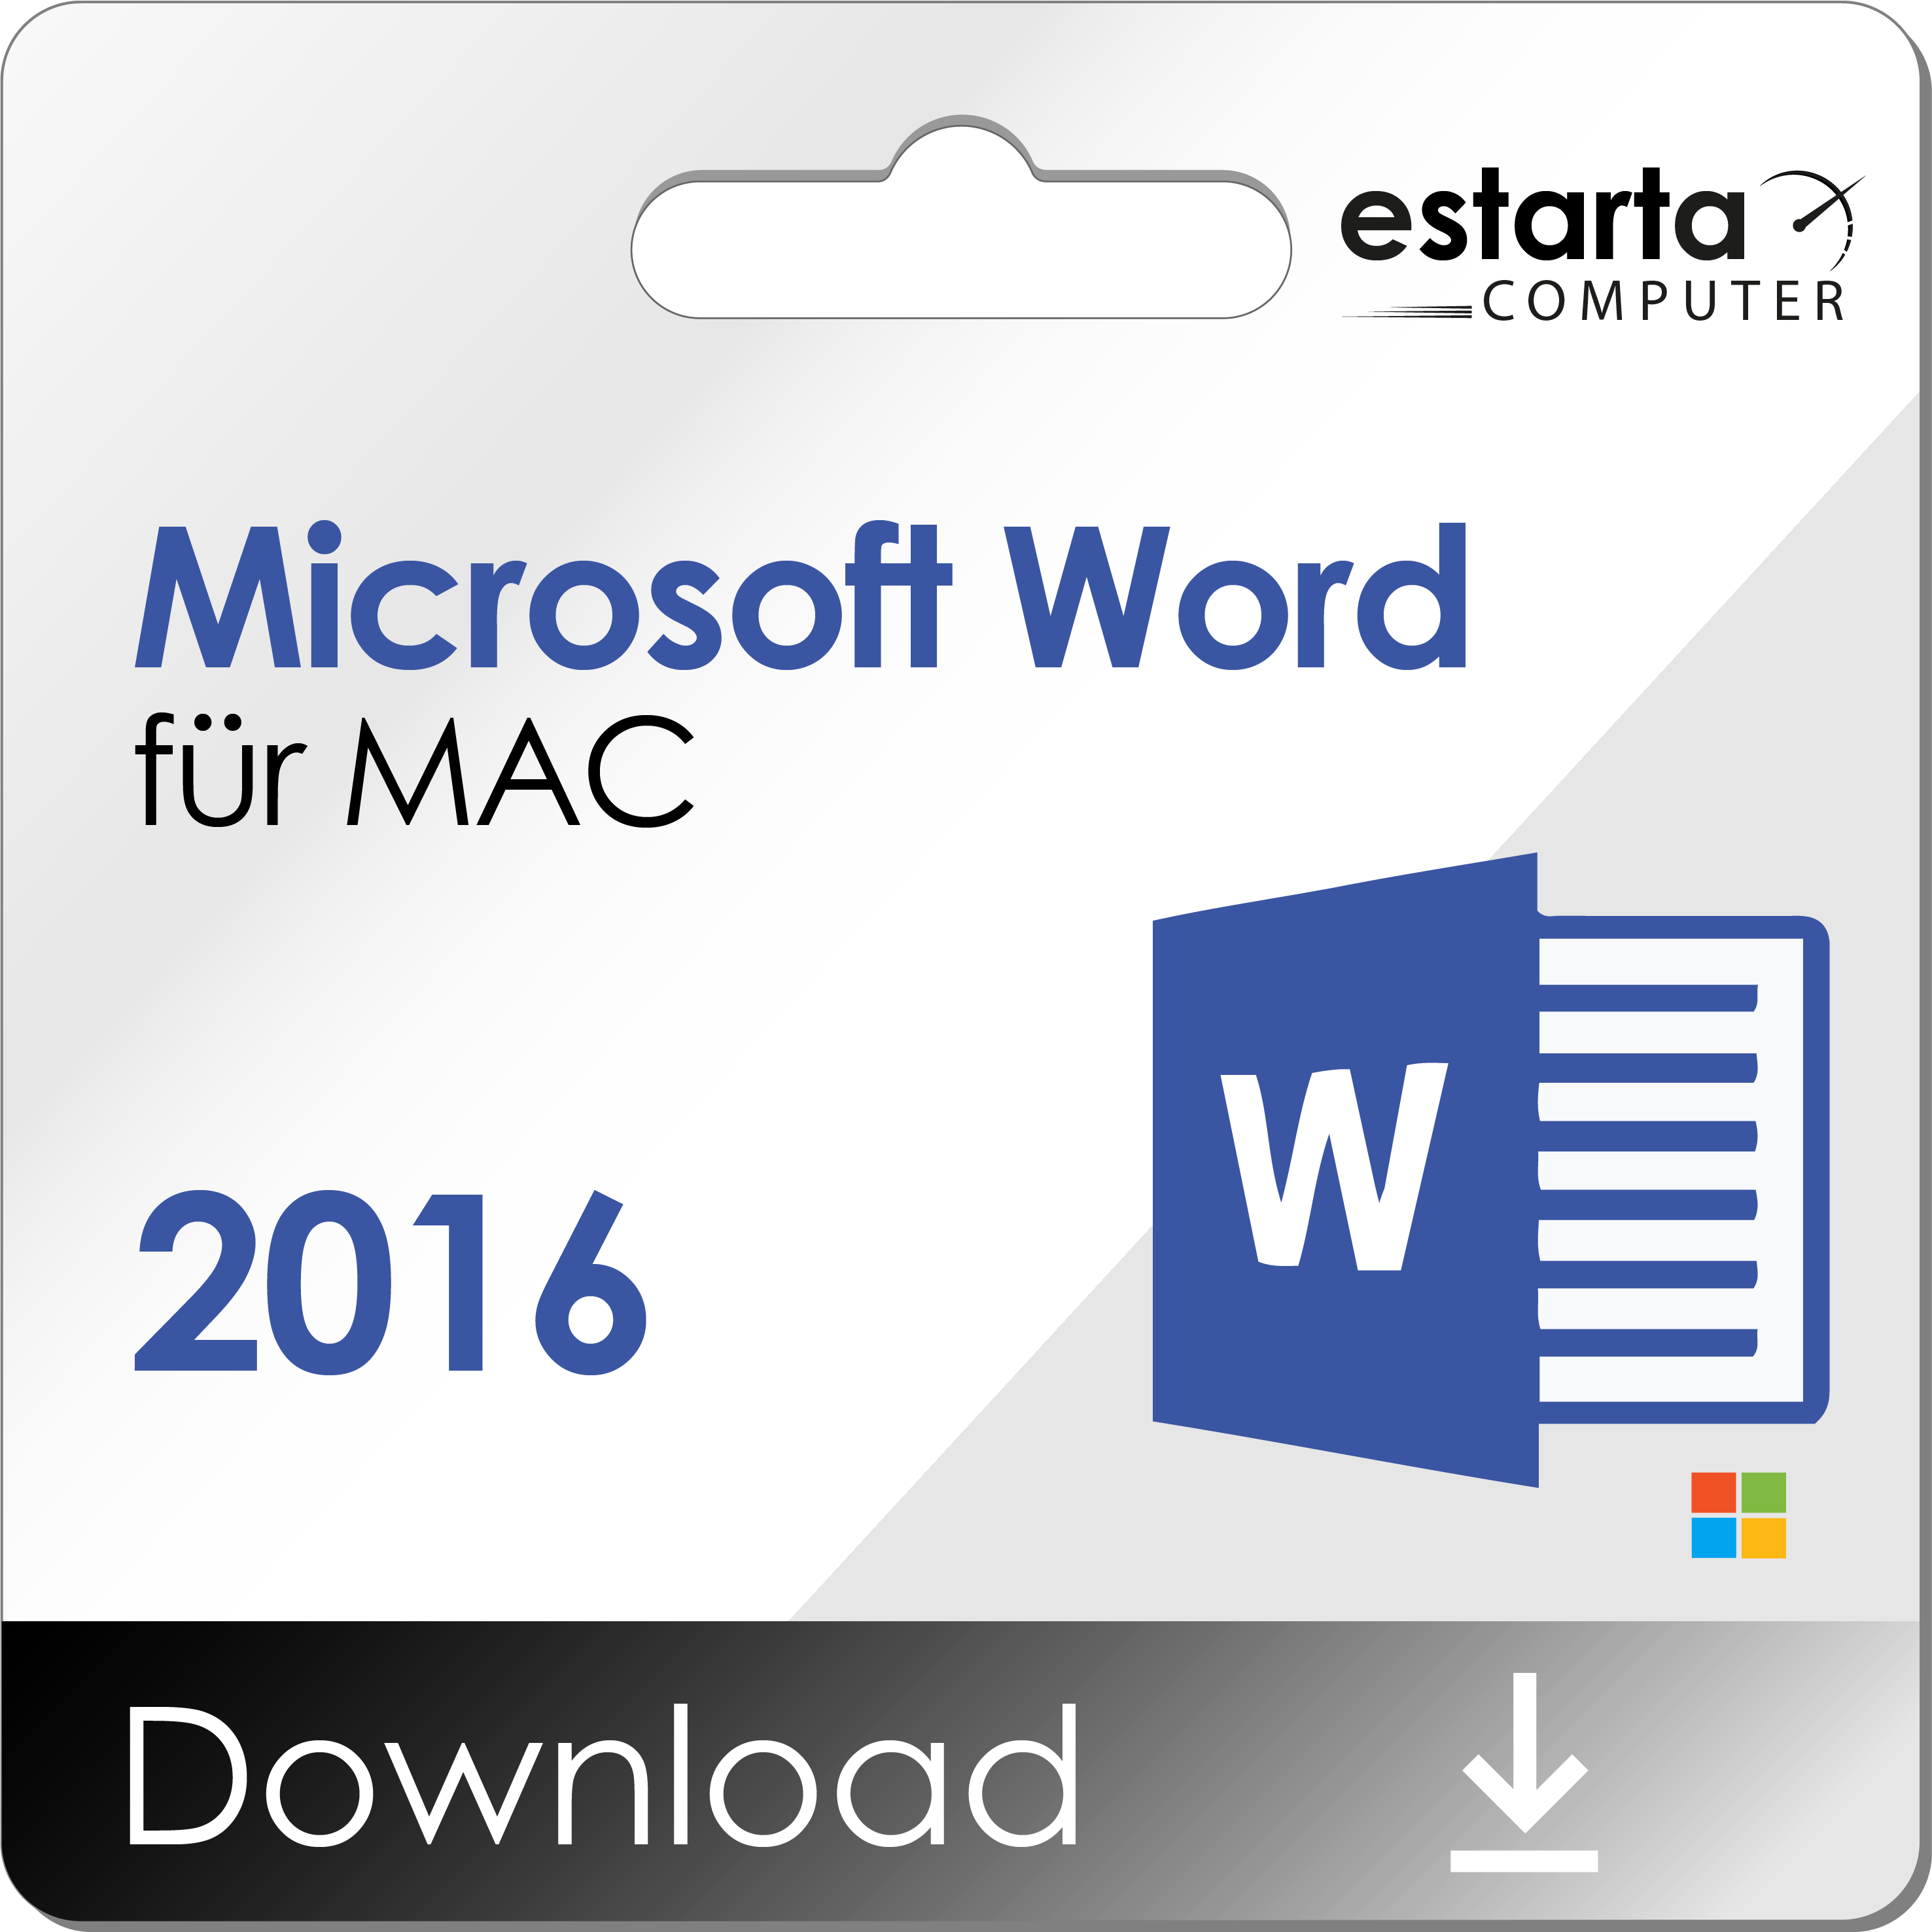 Microsoft Word for Mac 2016